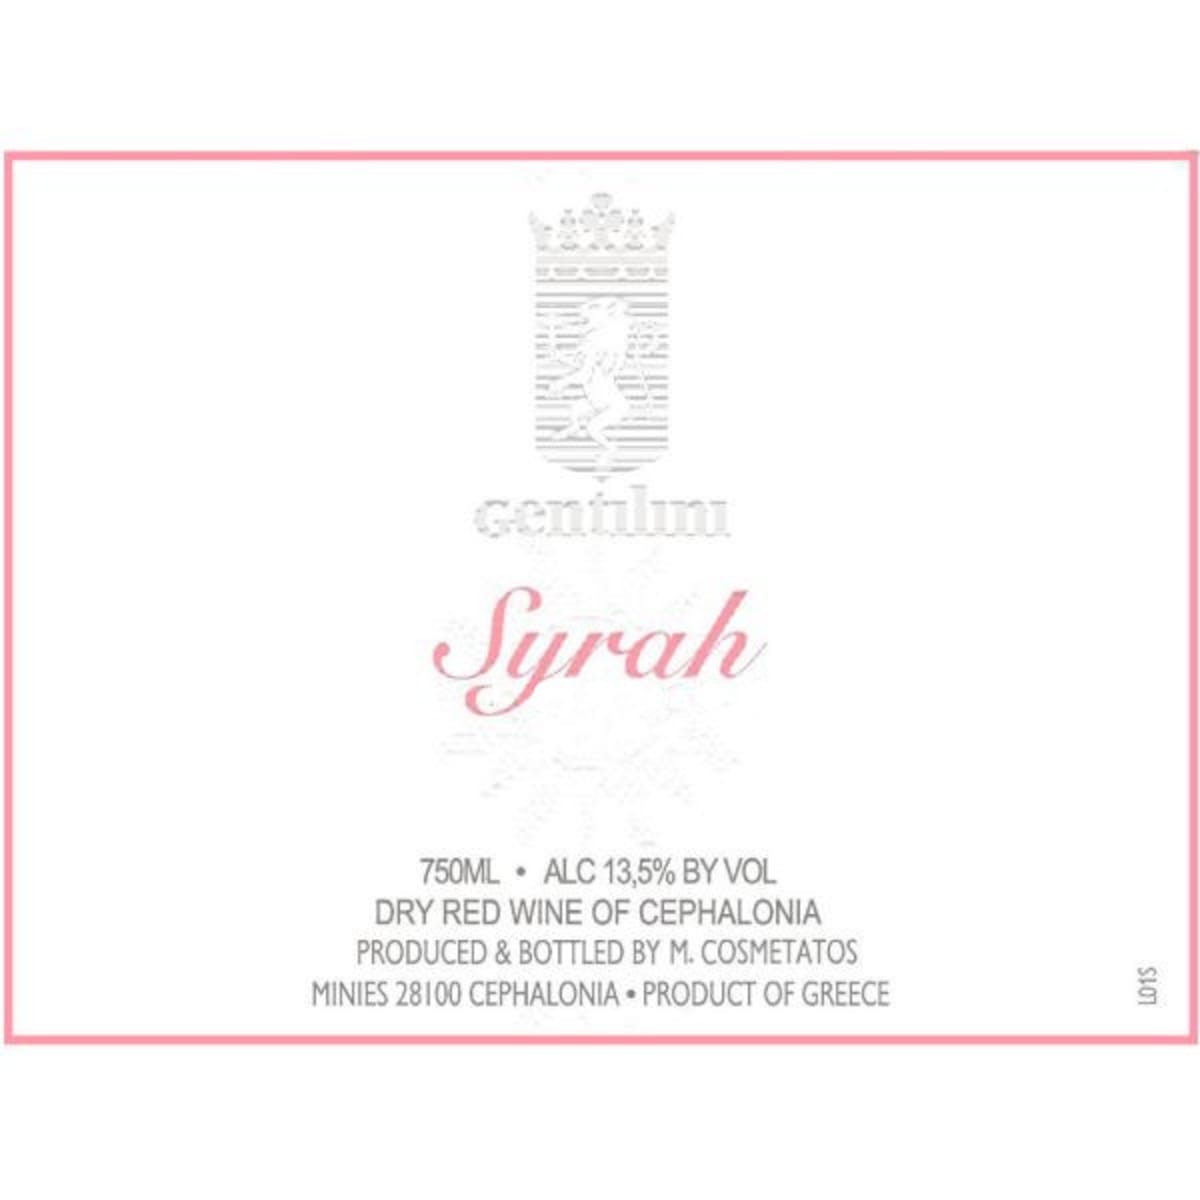 Gentilini Syrah 2009 Front Label